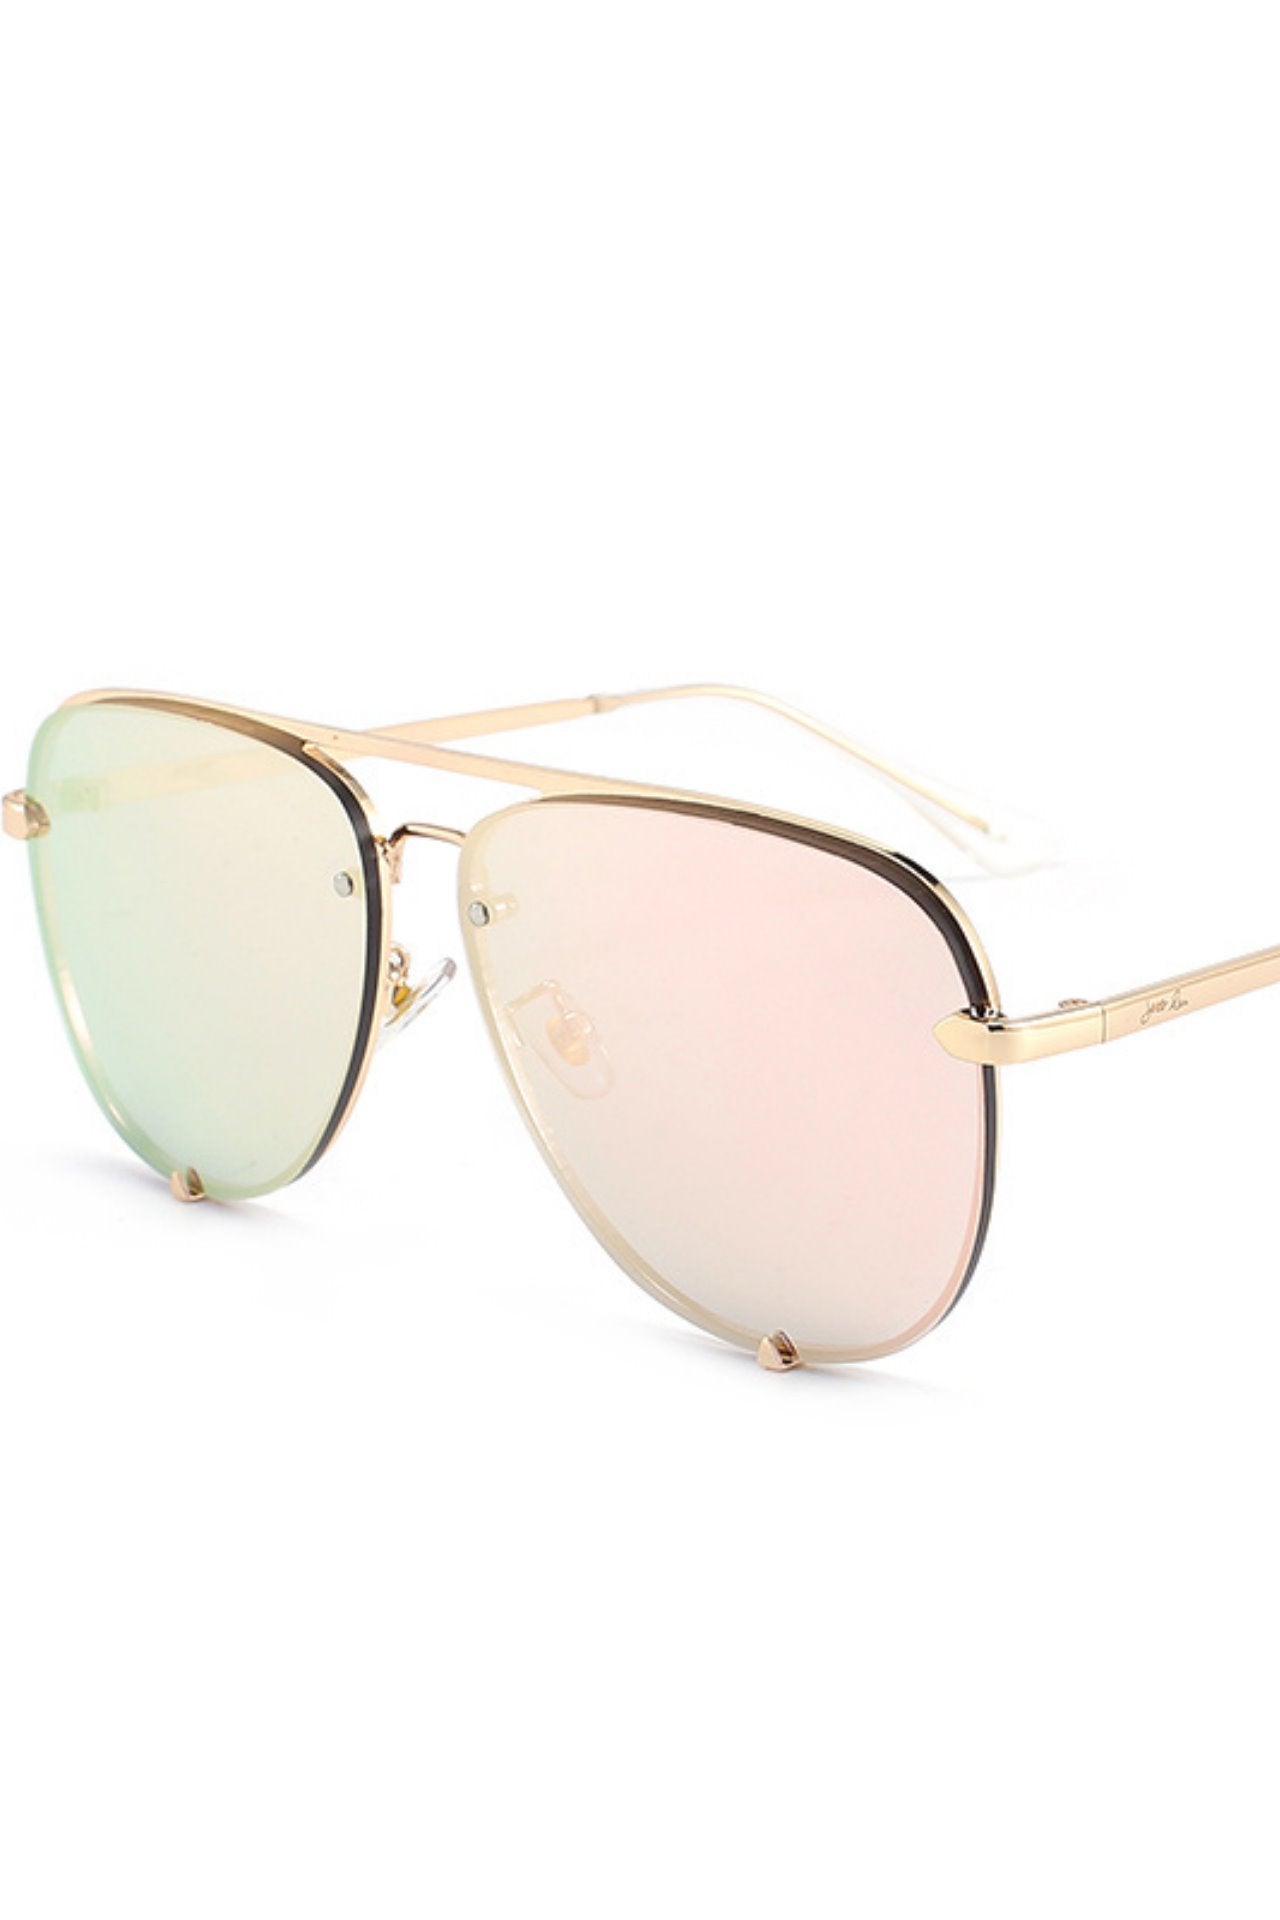 Hotel California Aviator Sunglasses - Jess Lea Boutique